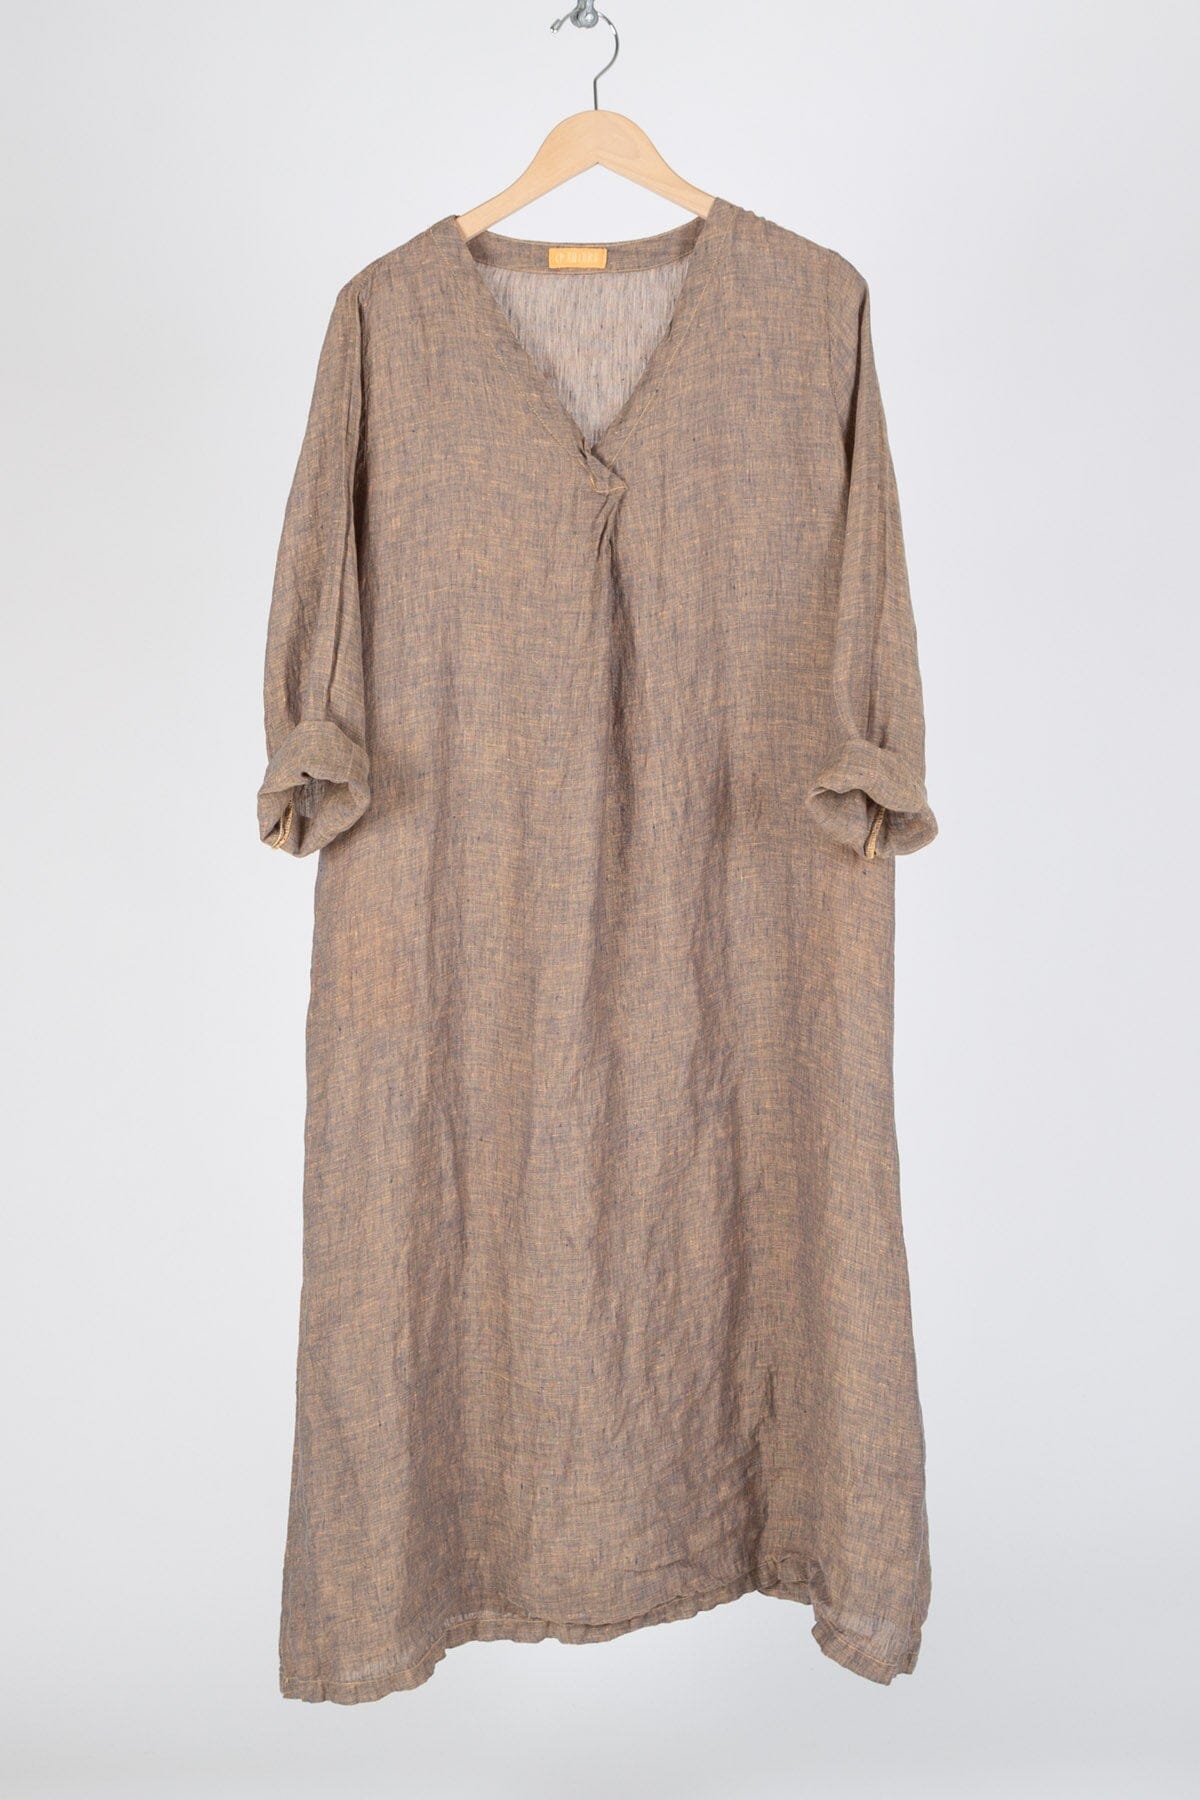 Mallory - Iridescent Linen Sale S90 - Iridescent Sale Dresses/Skirts CP Shades satsuma 162